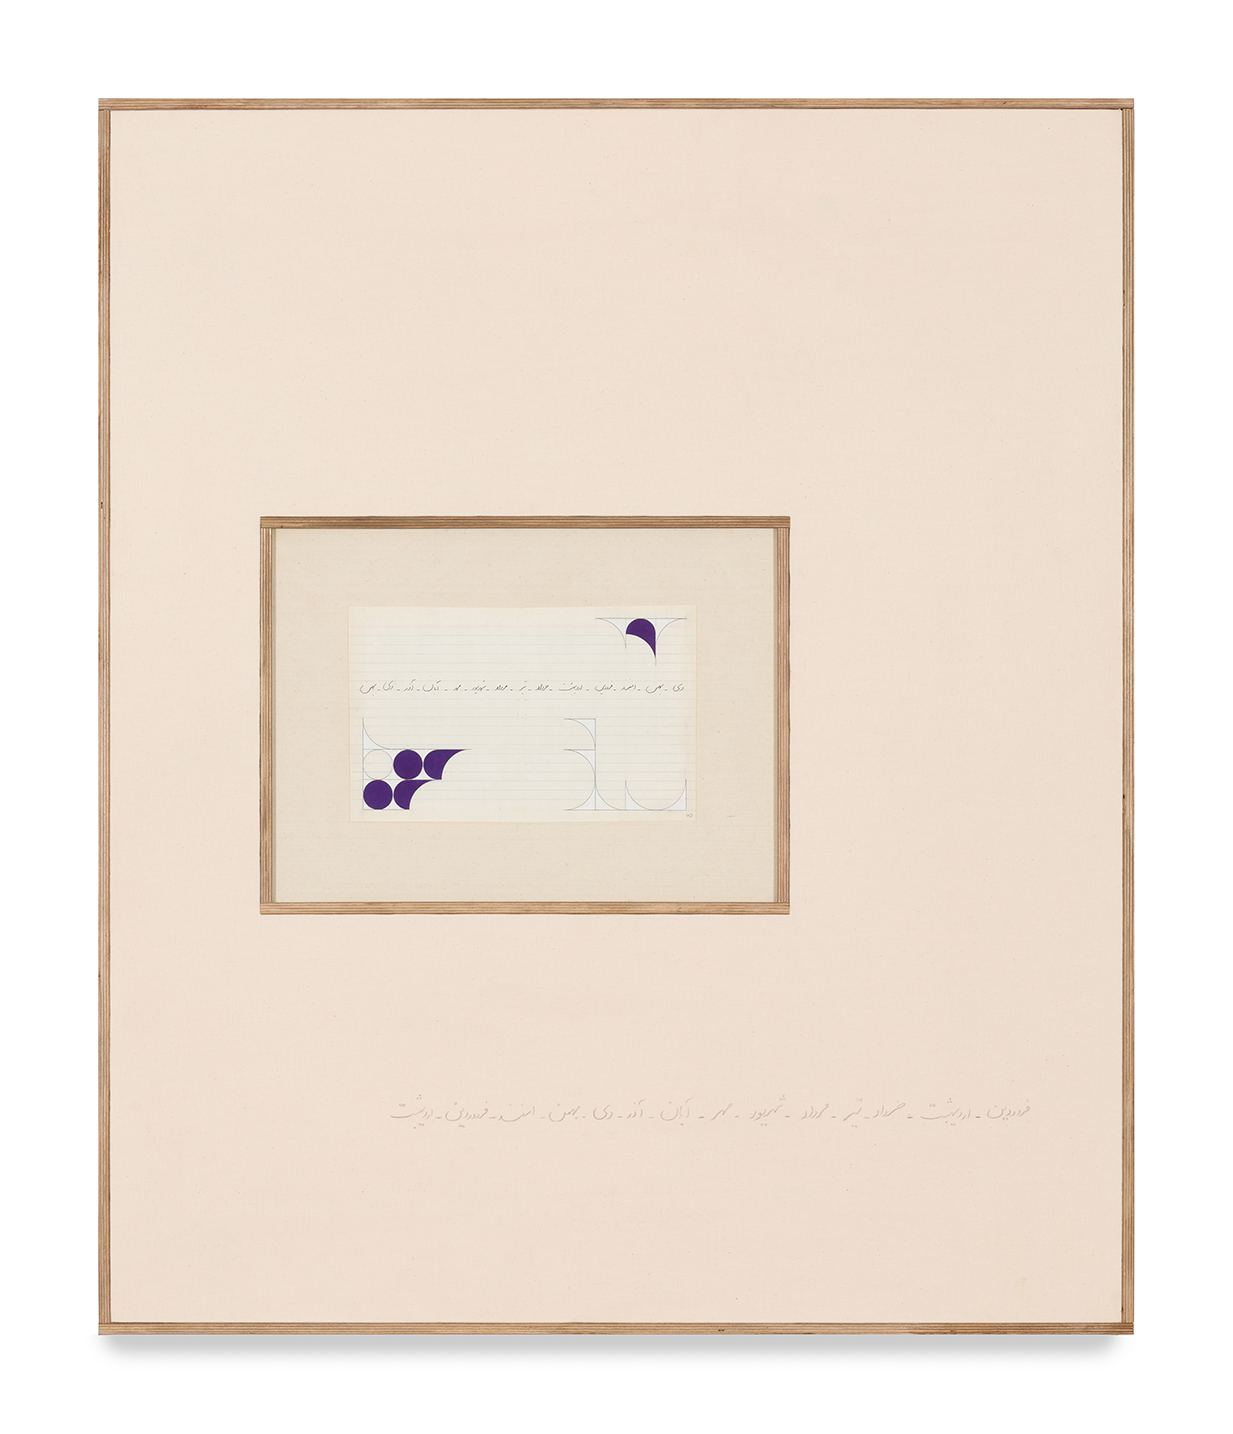 Shabahang Tayyari, Fourteen bloody months & two blank tulips with three purple stigmas, 2020, Gouache pen & pencil on paper, 34.2 x 21.2 CM